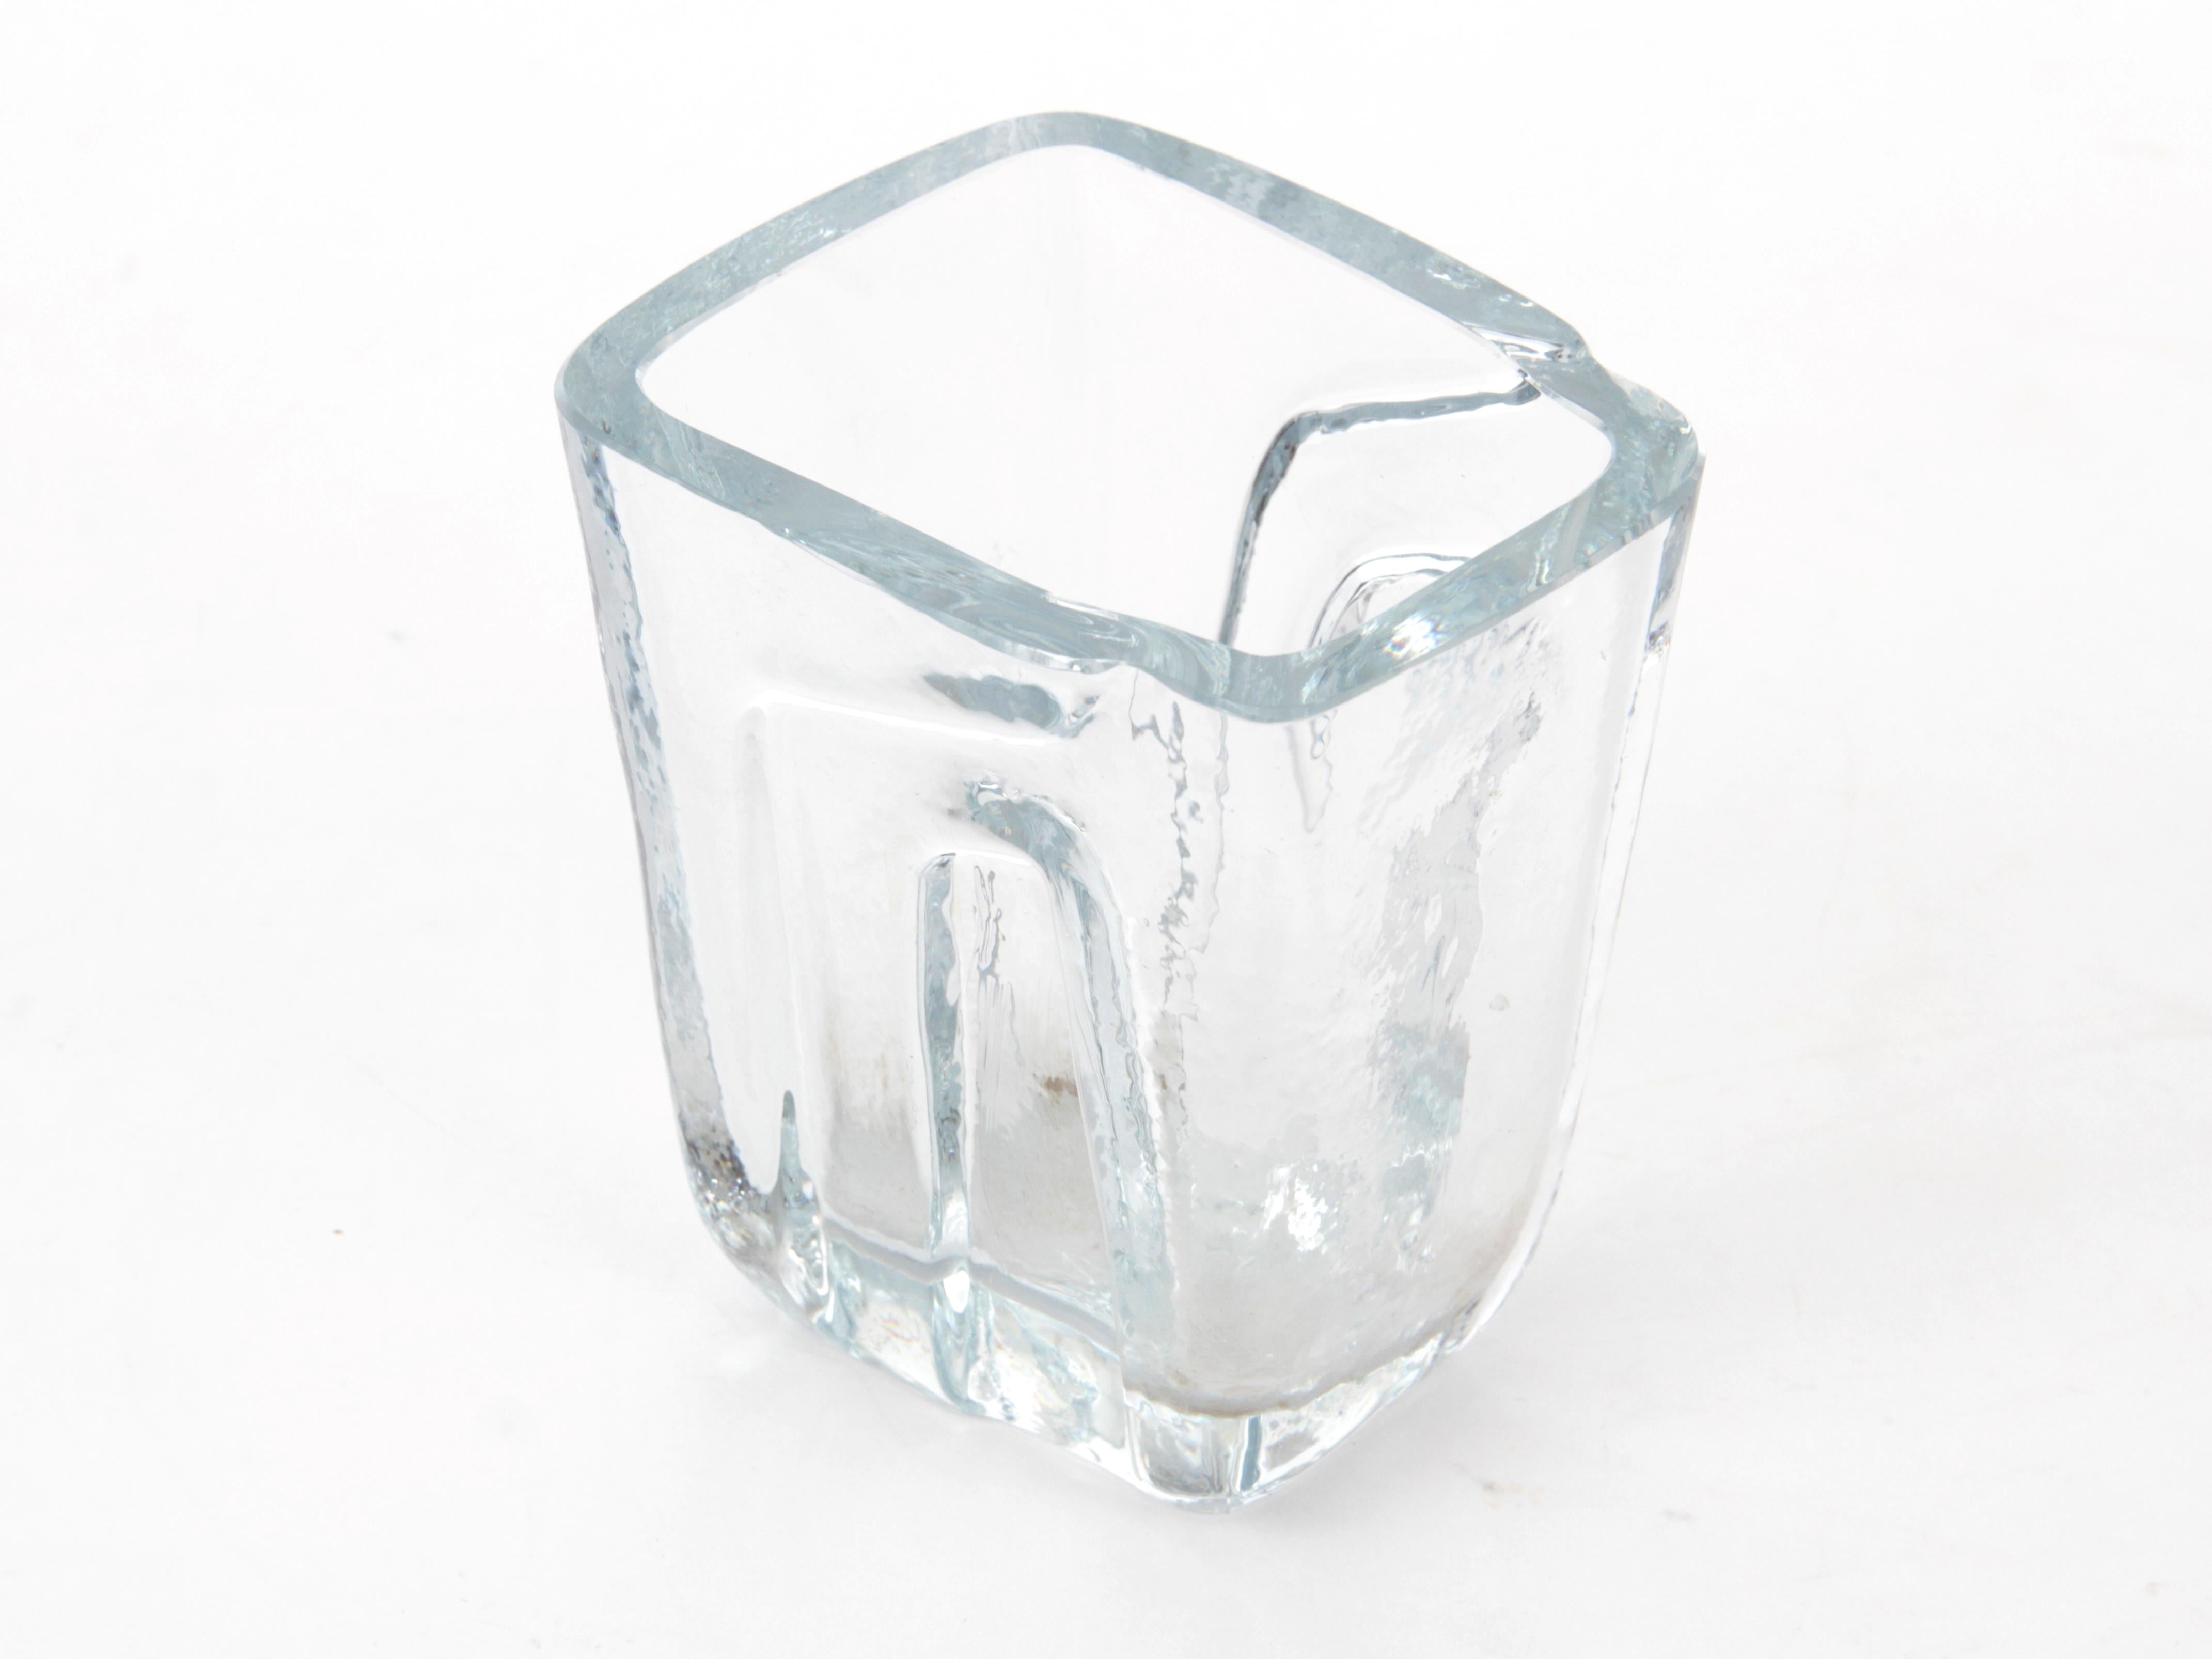 Mid-Century Modern Scandinavian glass vase by Kosta Boda.